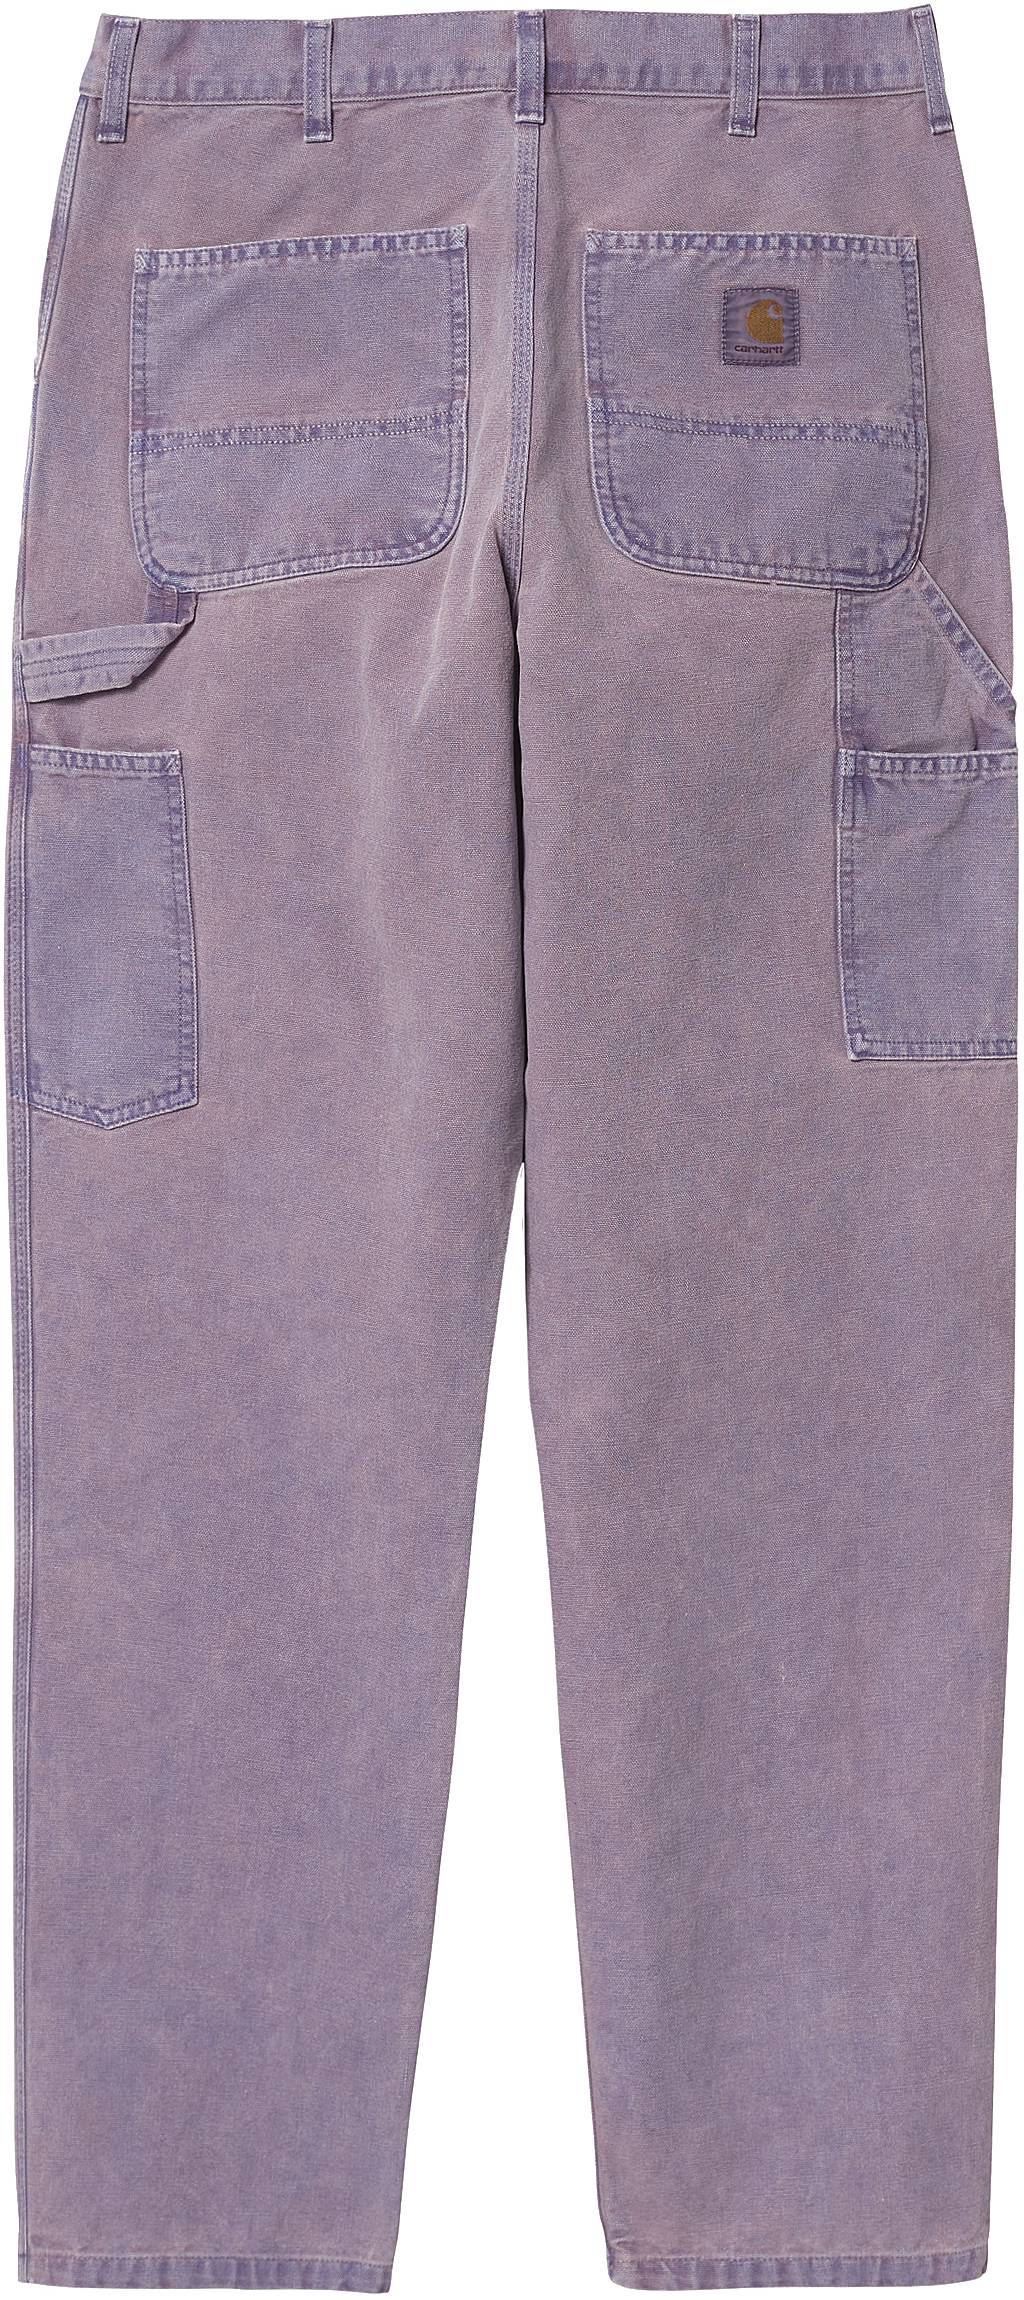  Carhartt Wip Pantaloni Jeans Single Knee Pant Razzmic Viola Uomo - 1